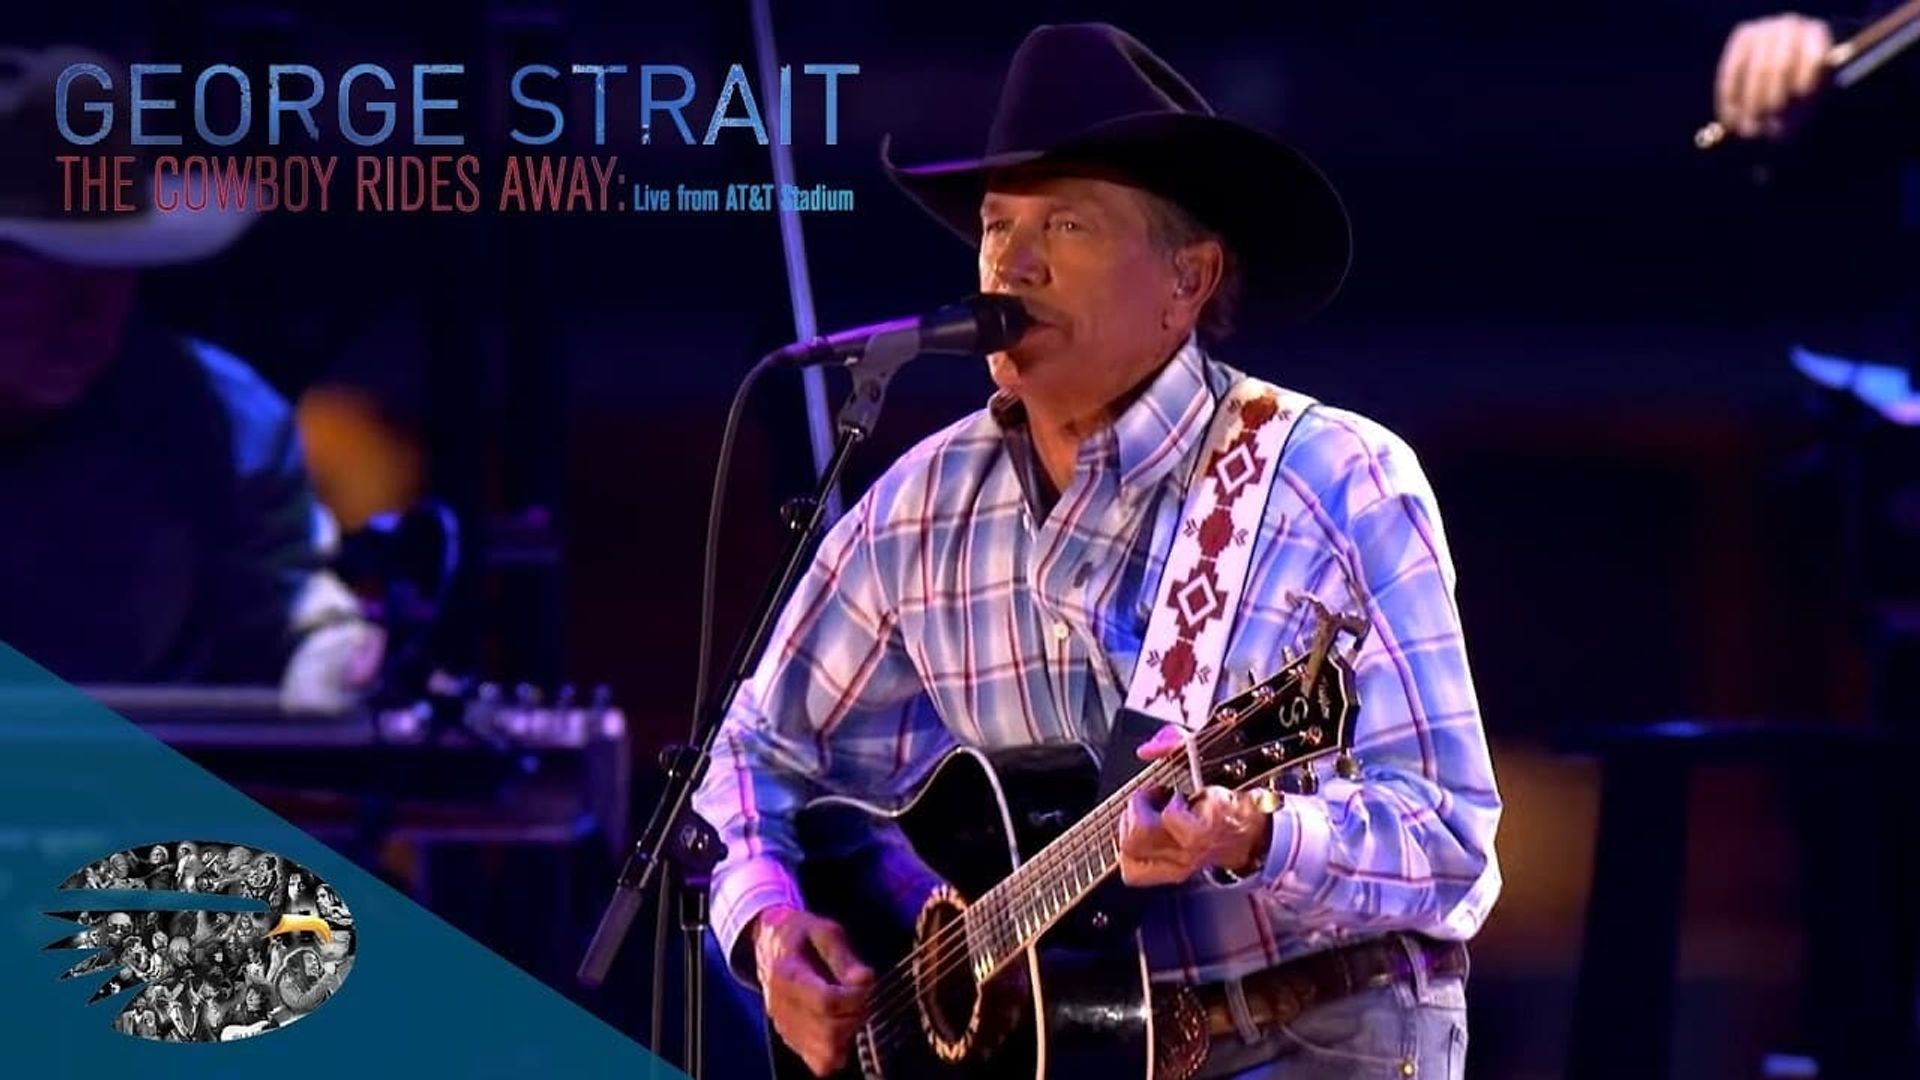 George Strait: The Cowboy Rides Away background